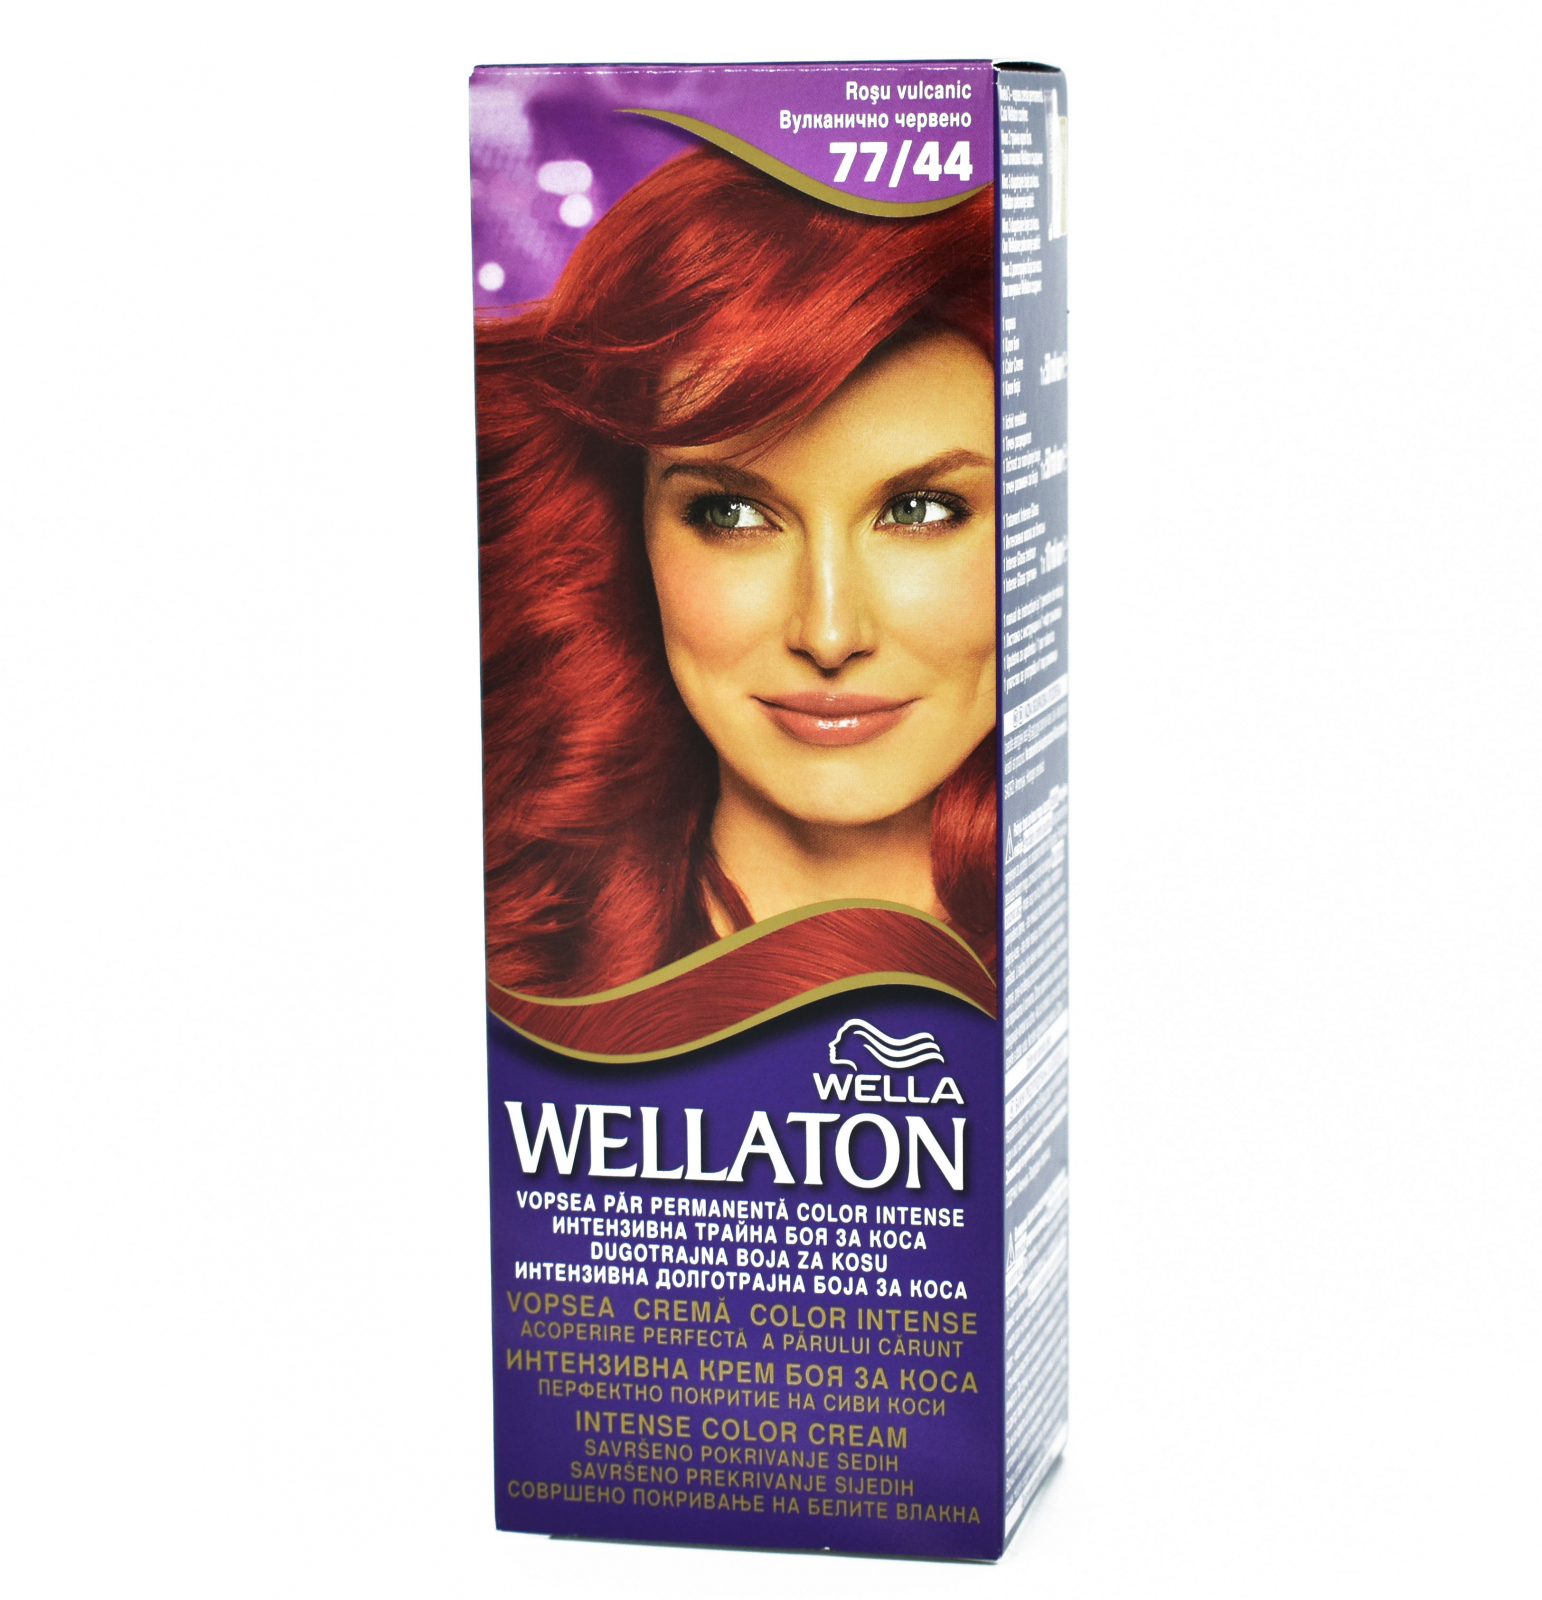 Краска для волос веллатон купить. Веллатон 77/44. Краска Wellaton для волос красный вулкан 77/44. Краска веллатон в коробке. Краска веллатон карамель.